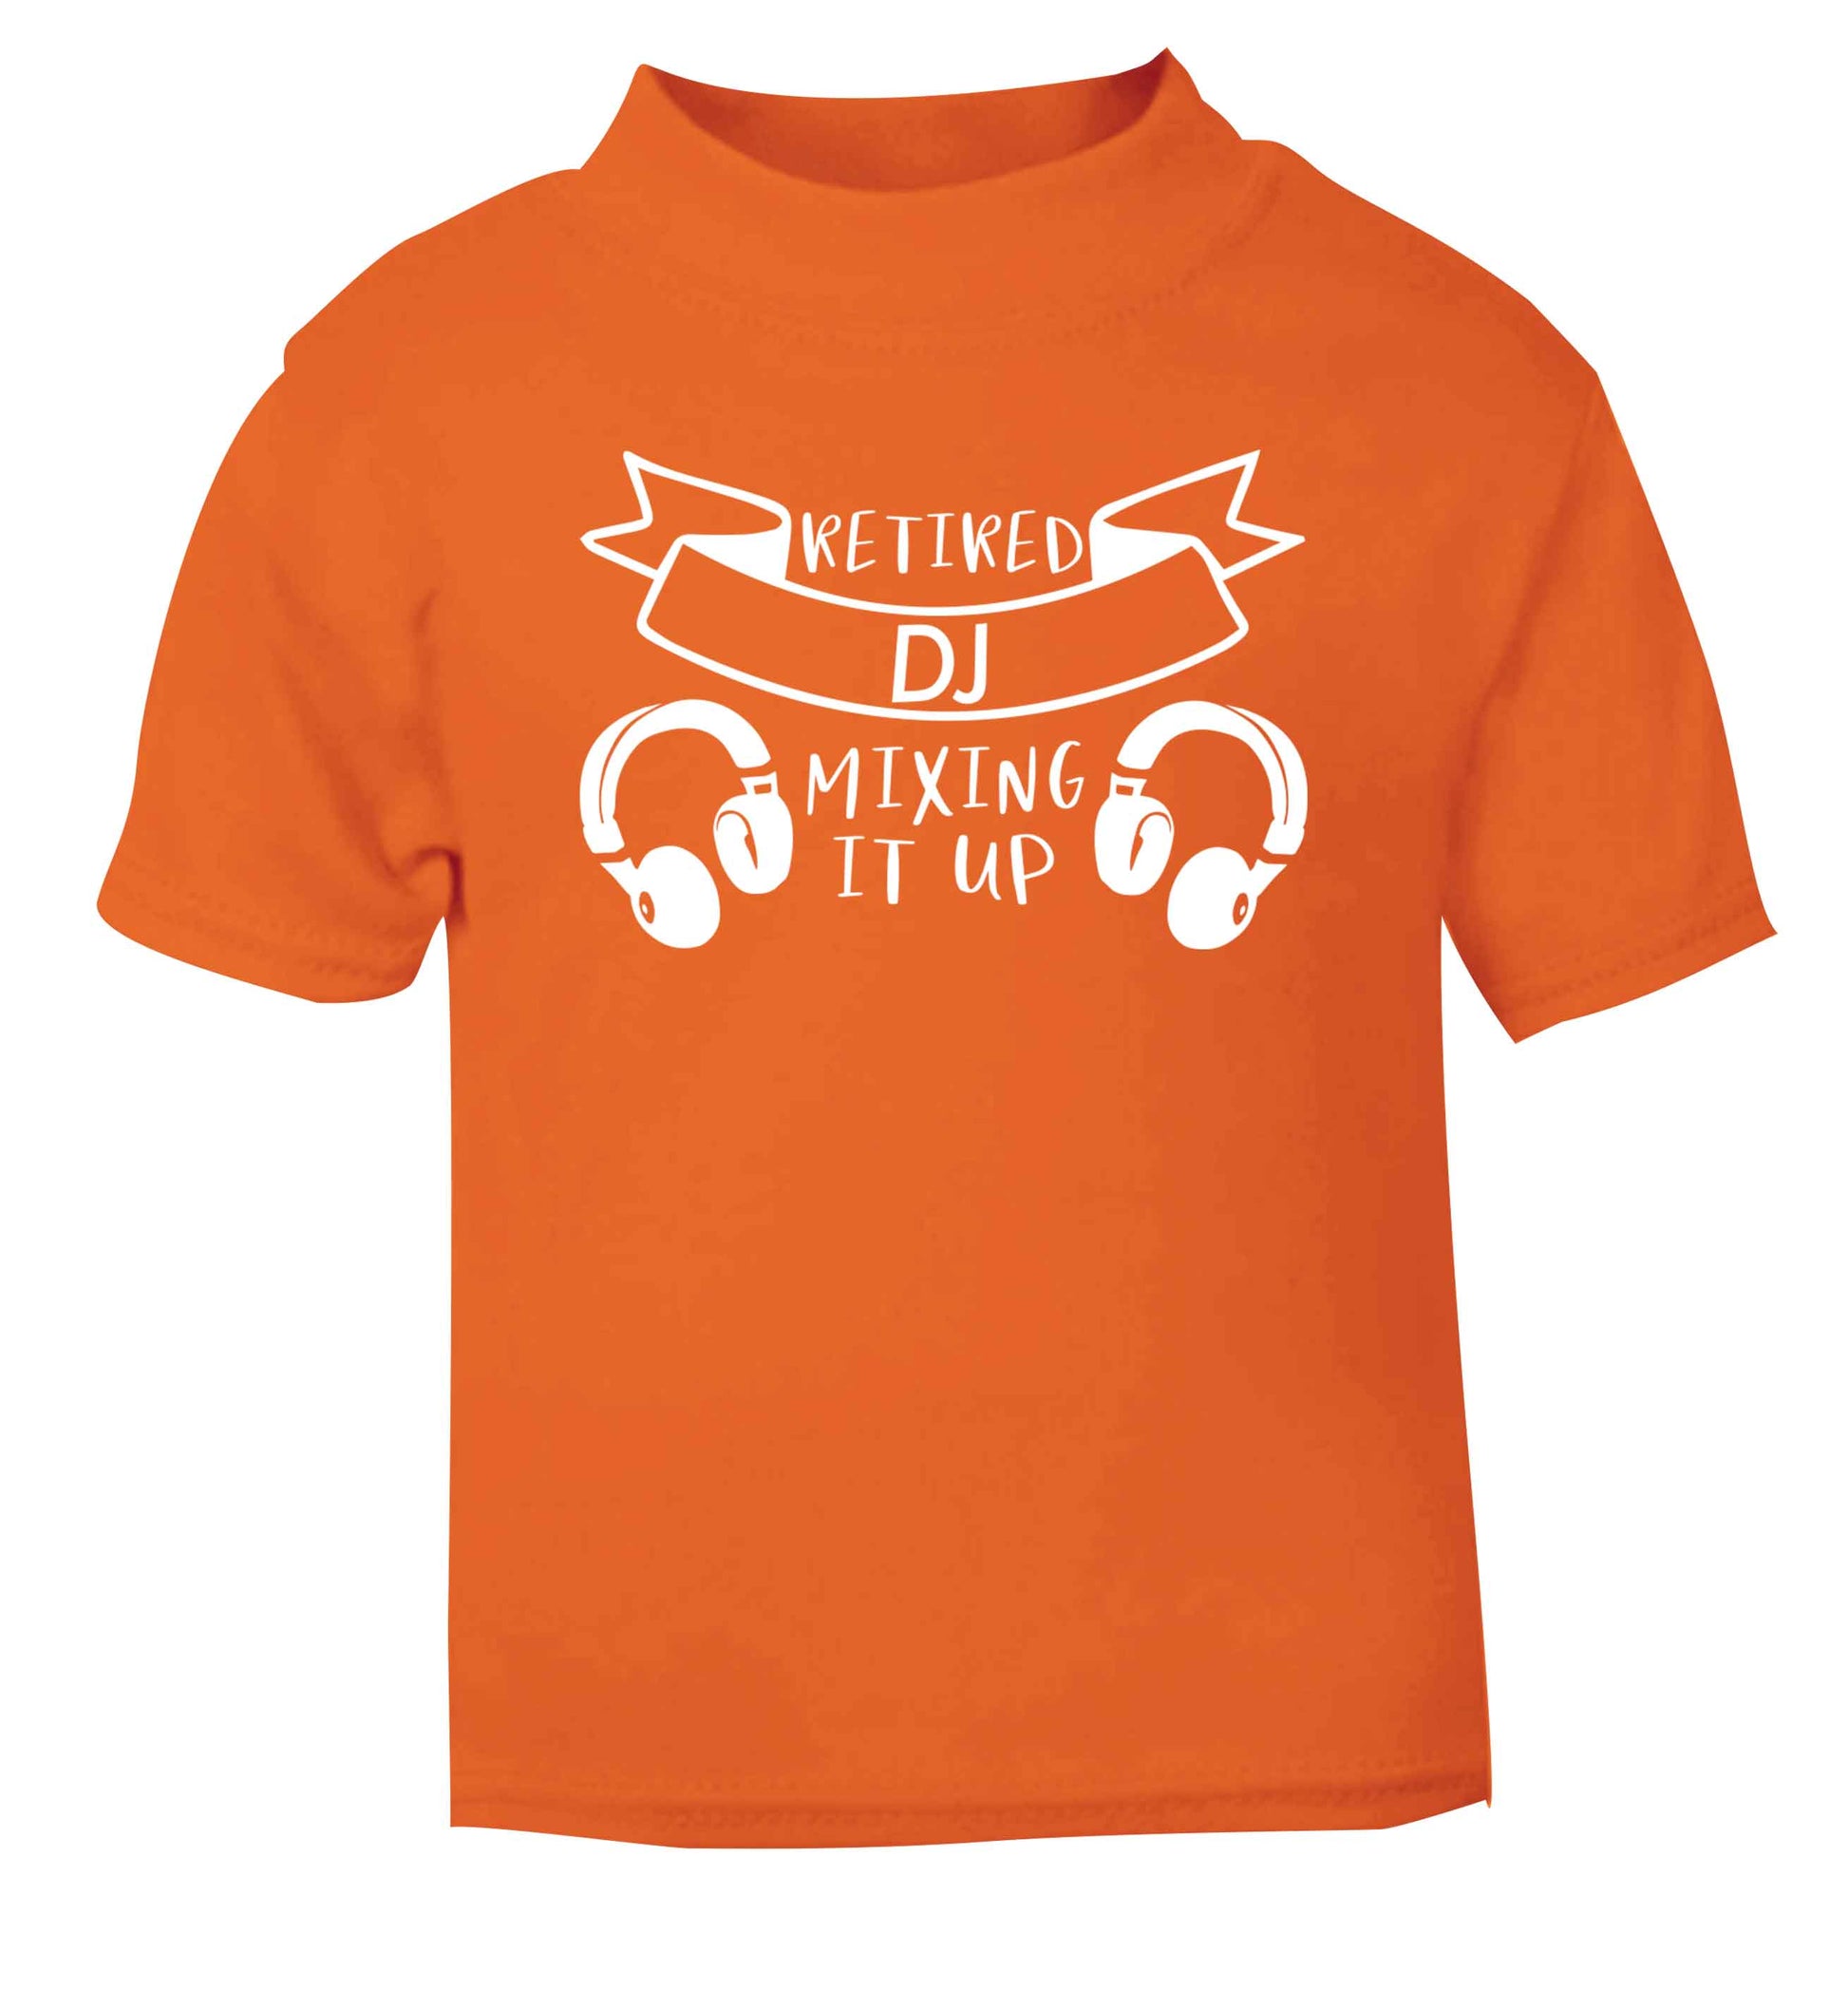 Retired DJ mixing it up orange Baby Toddler Tshirt 2 Years